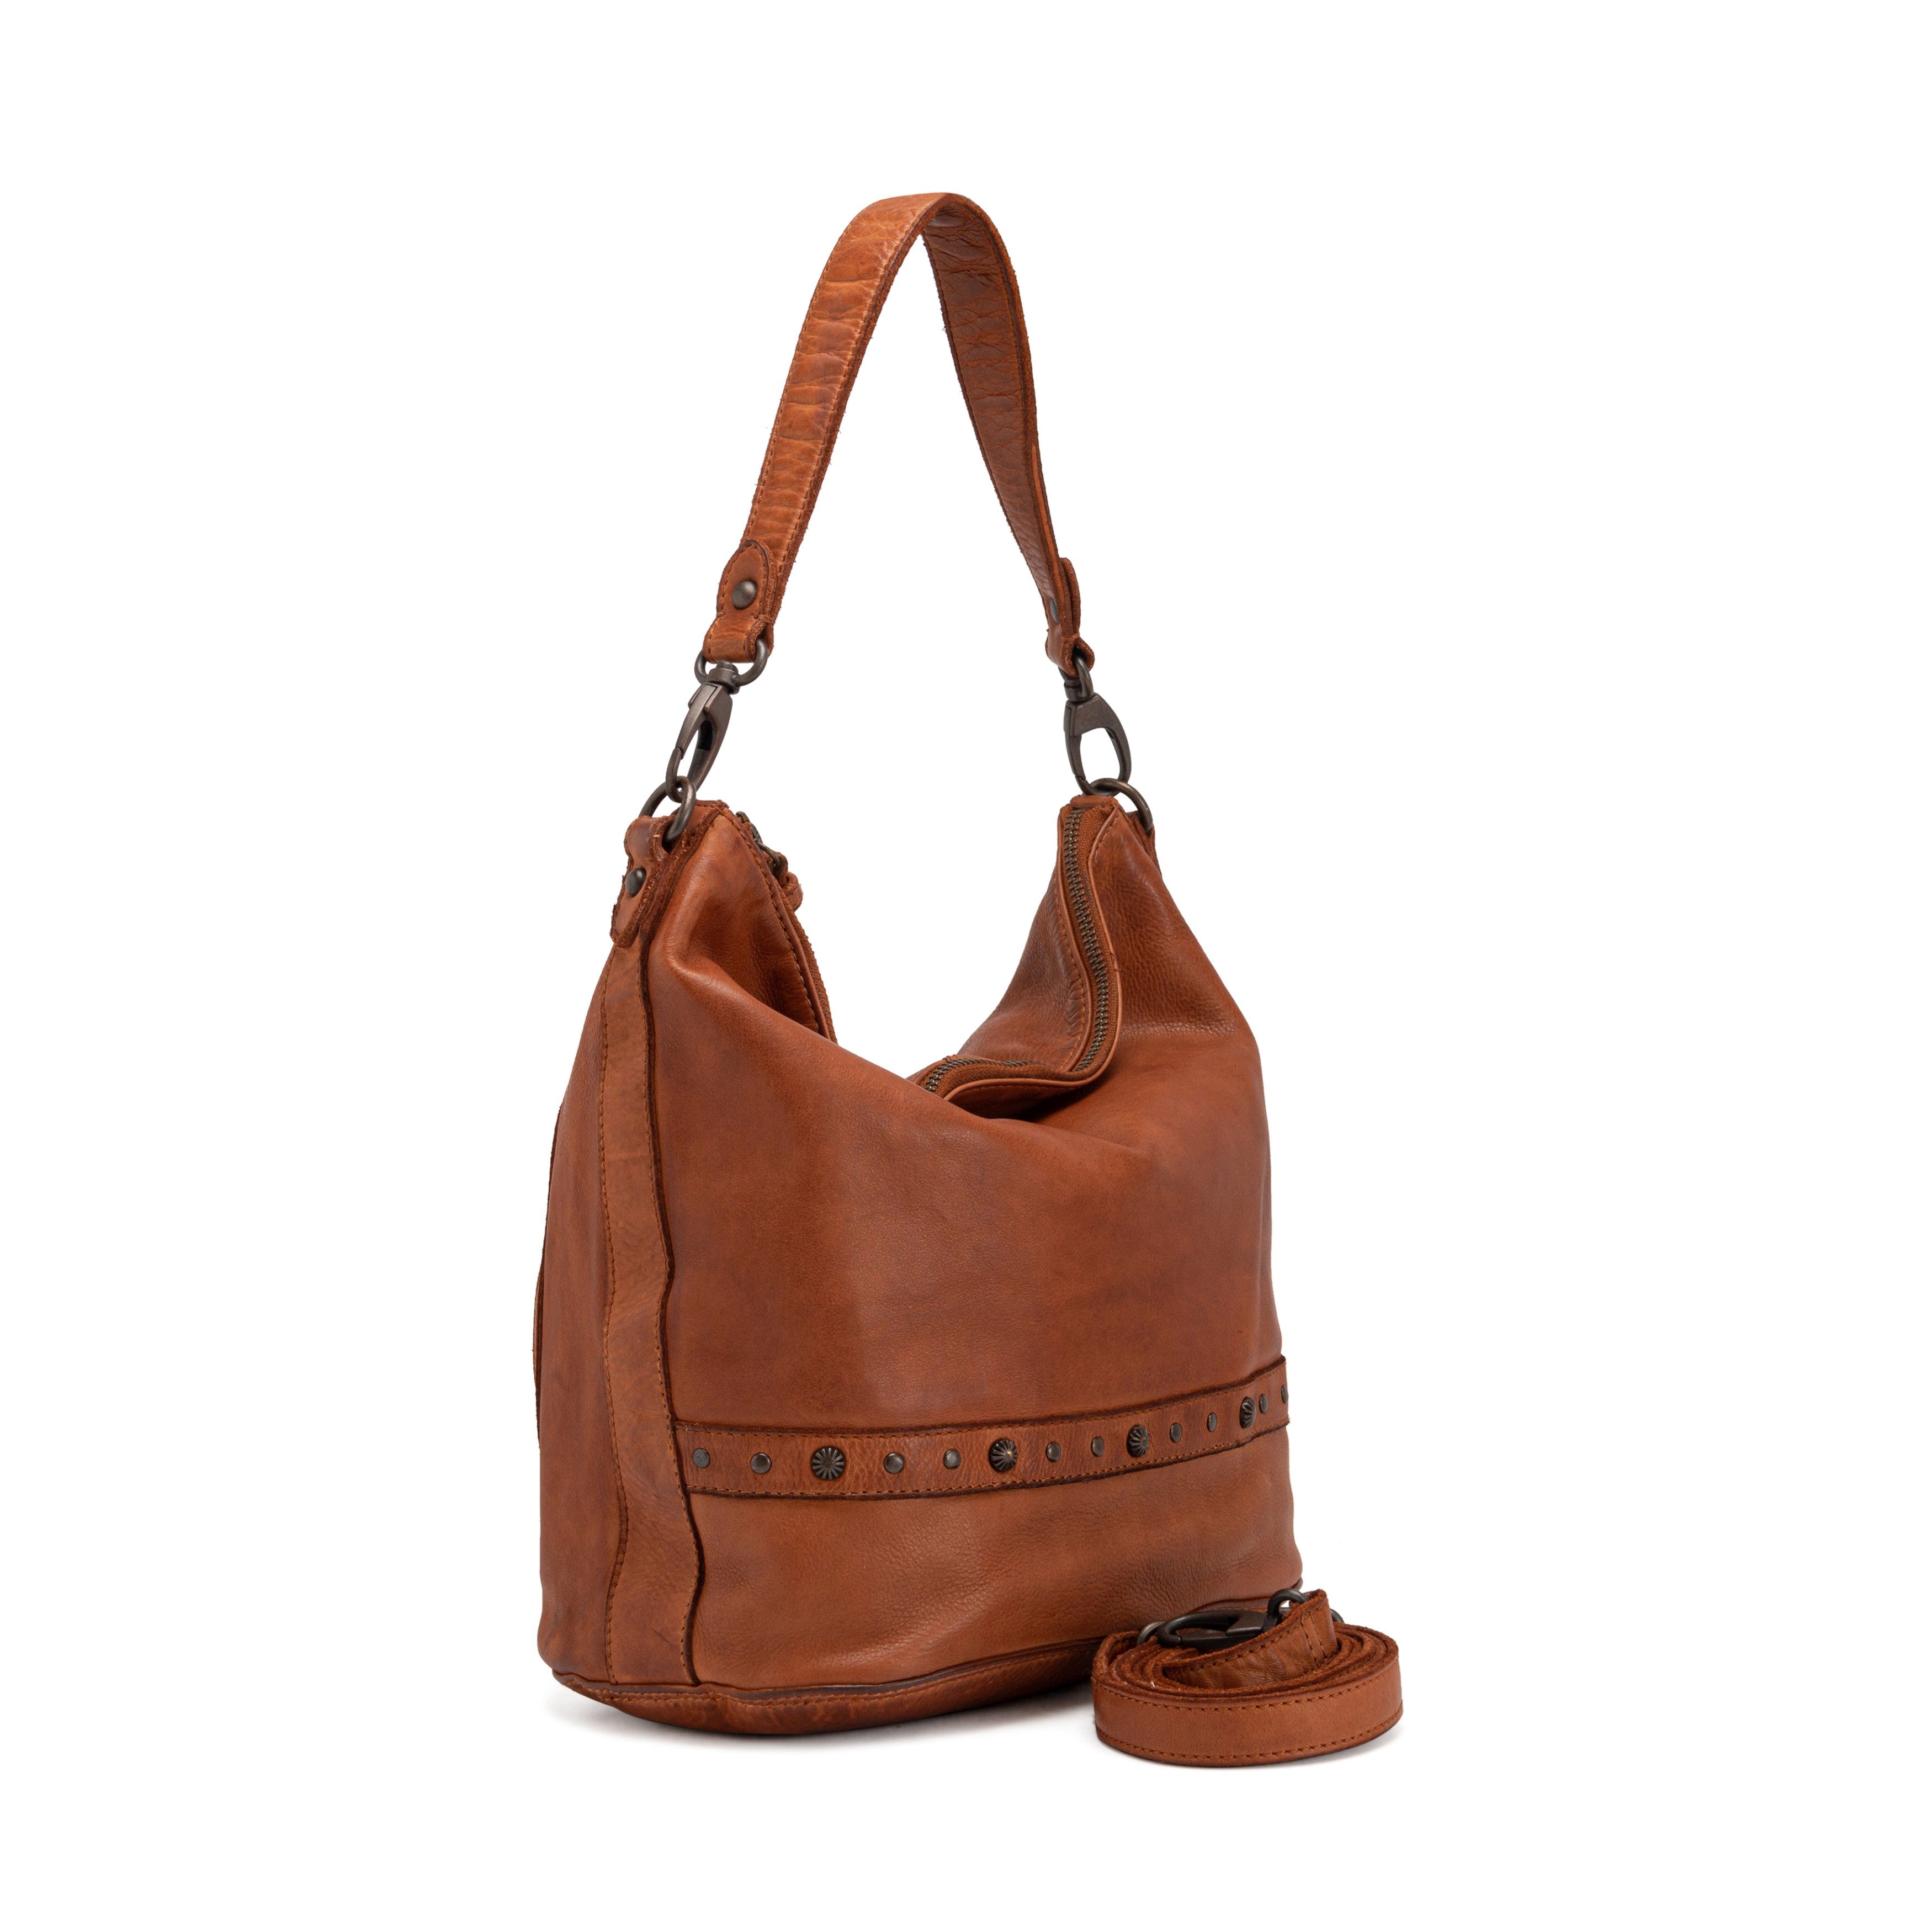 Gianni Conti Italian Leather Shoulder Bag